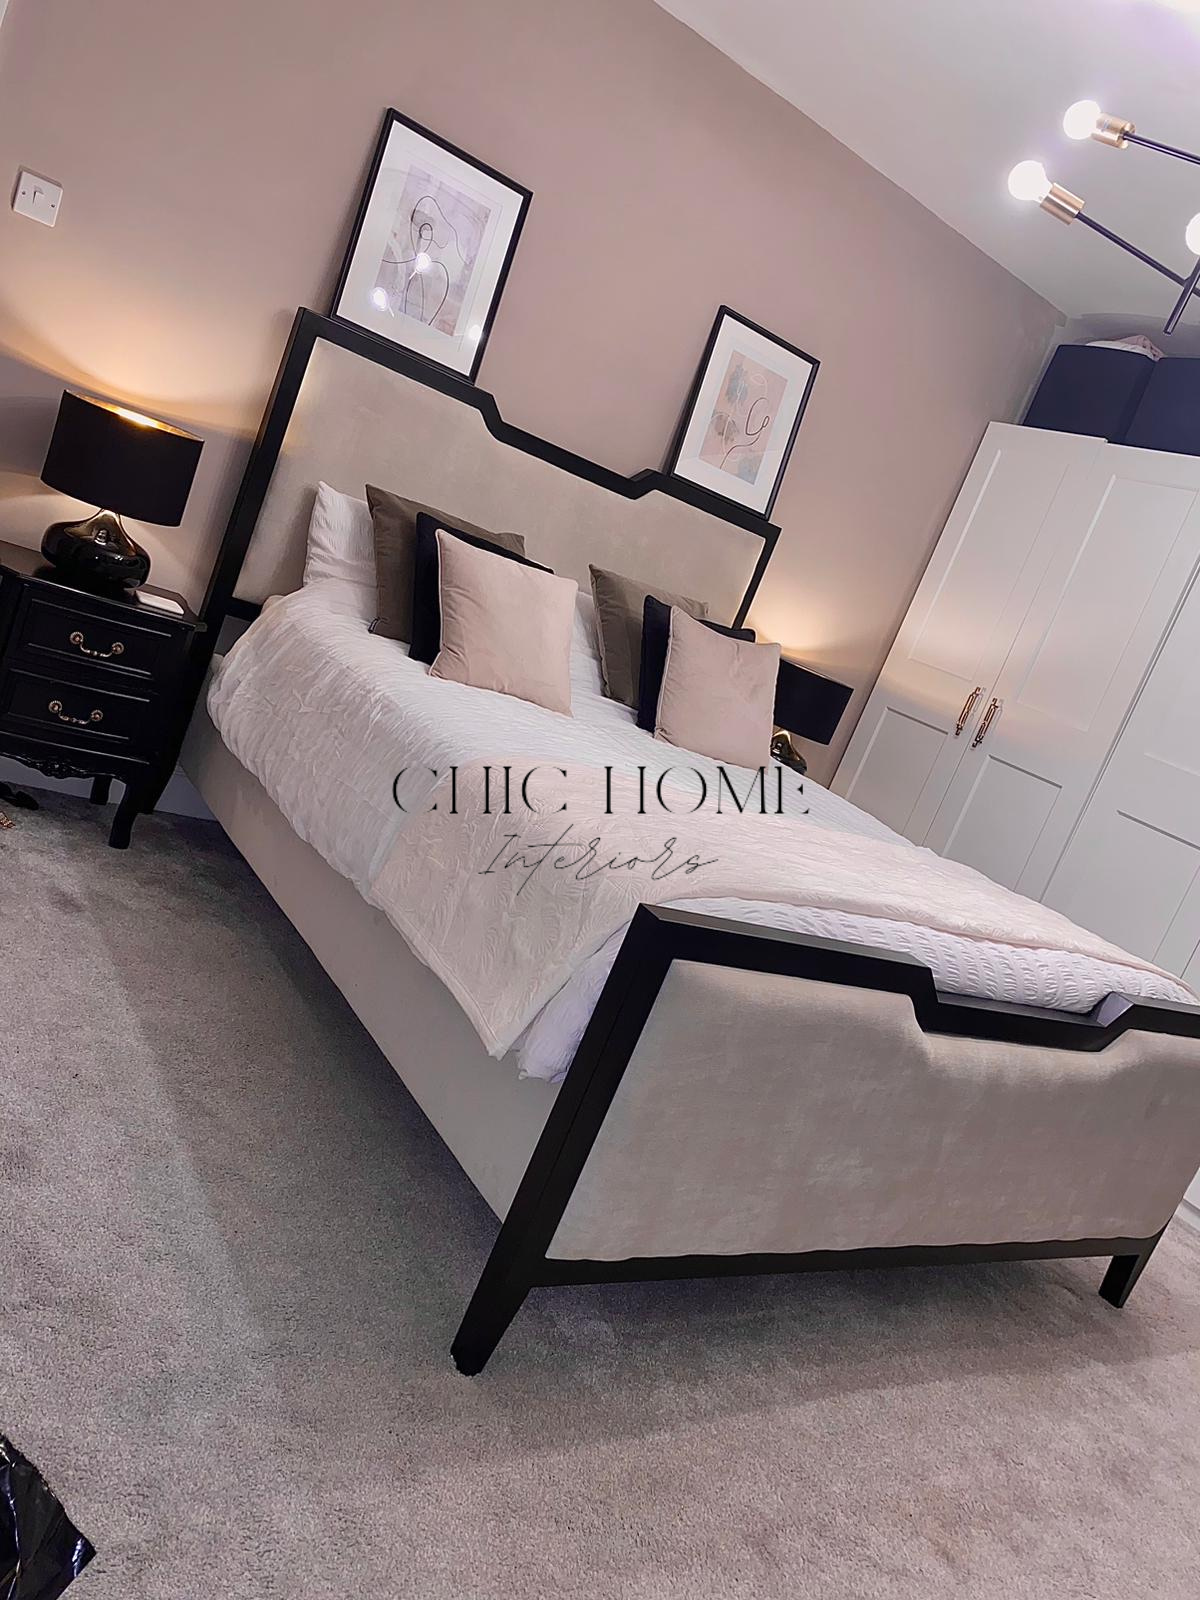 The Bespoke Royal Monochrome II Bed- With Black Metal Surround- Black & Cream Fully Customisable with Storage Options- Washington Black Border Range